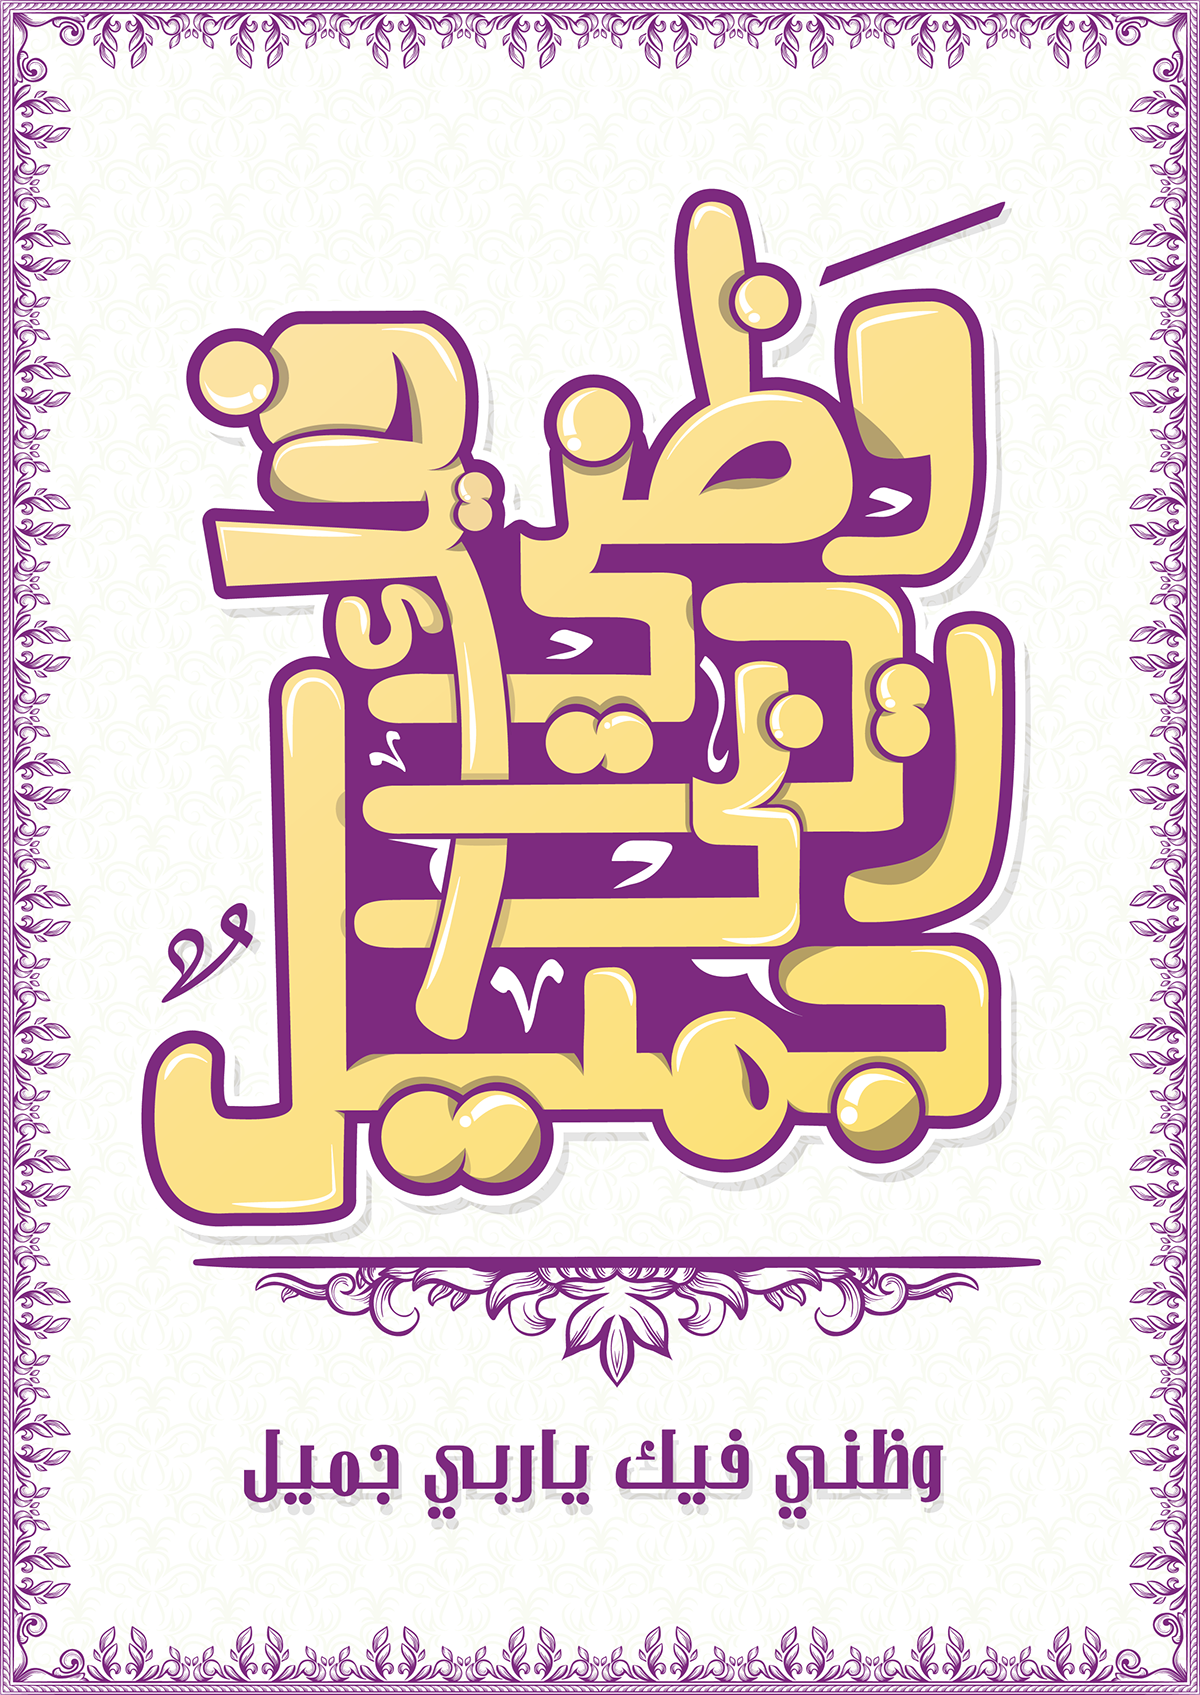 خط حر arabic_typography typography   lettering graphic_design Calligraphy   vector inking